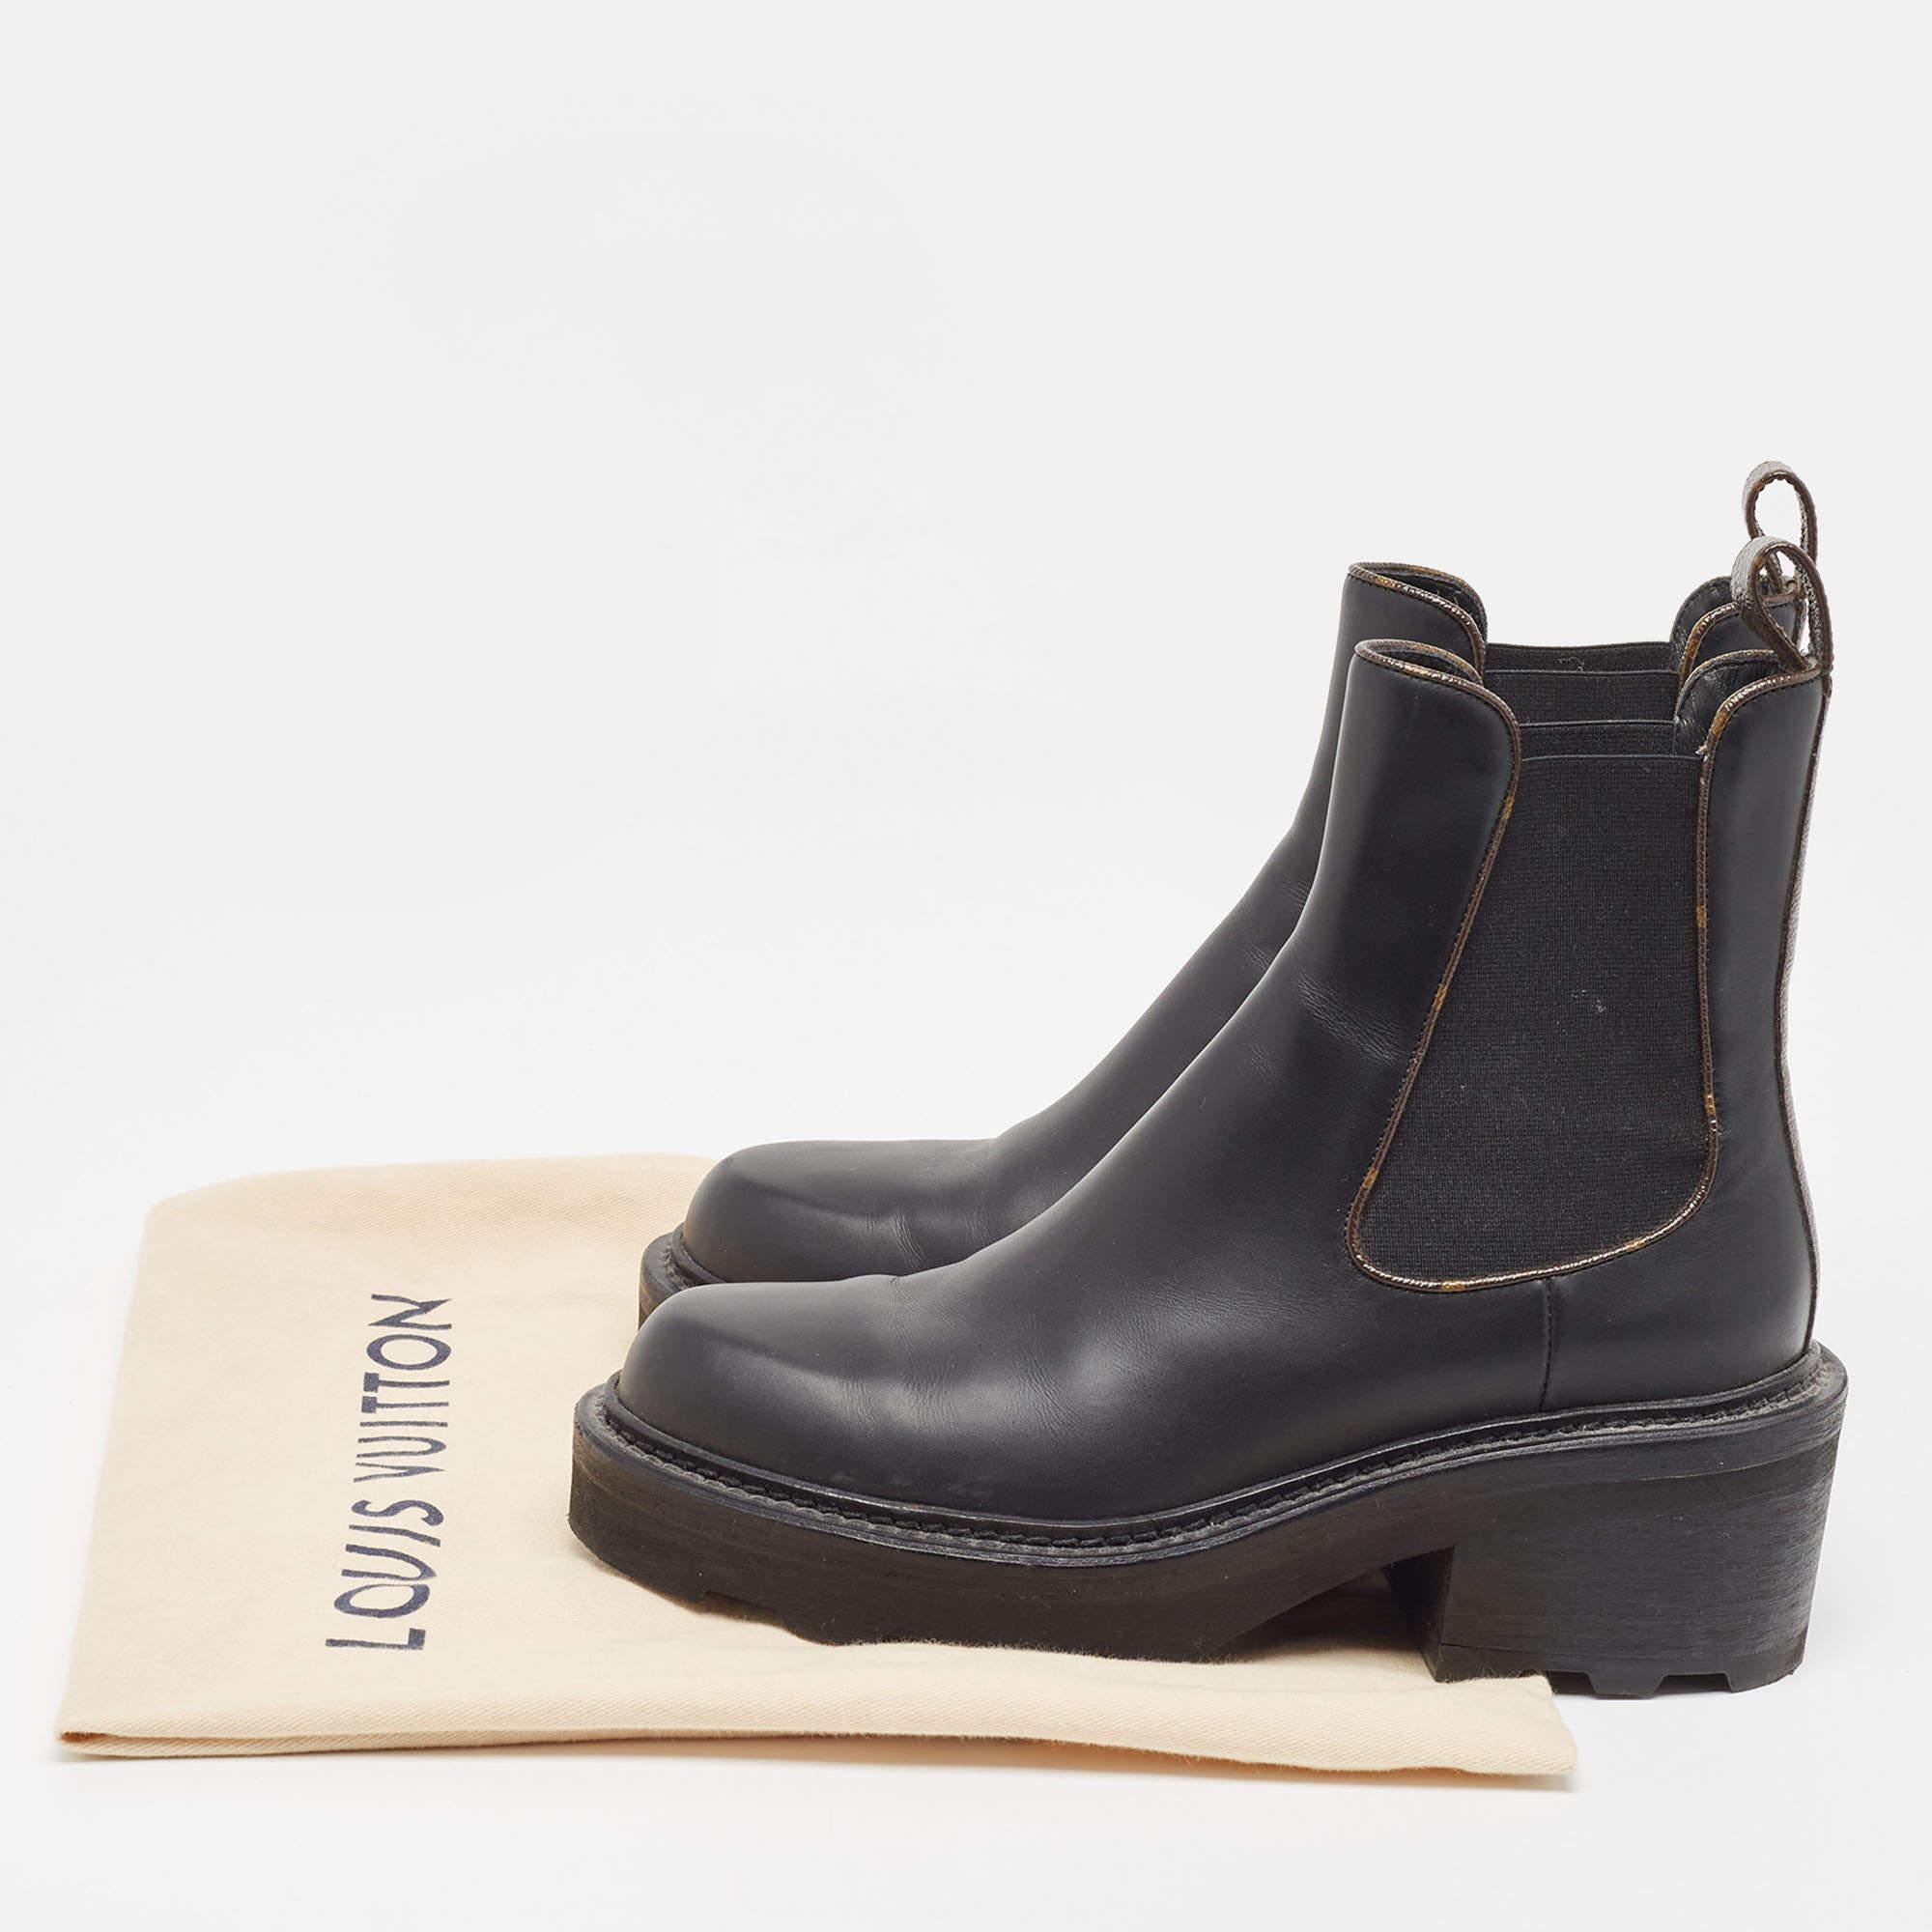 Louis Vuitton Black Leather and Monogram Canvas Chelsea Boots Size 37 5